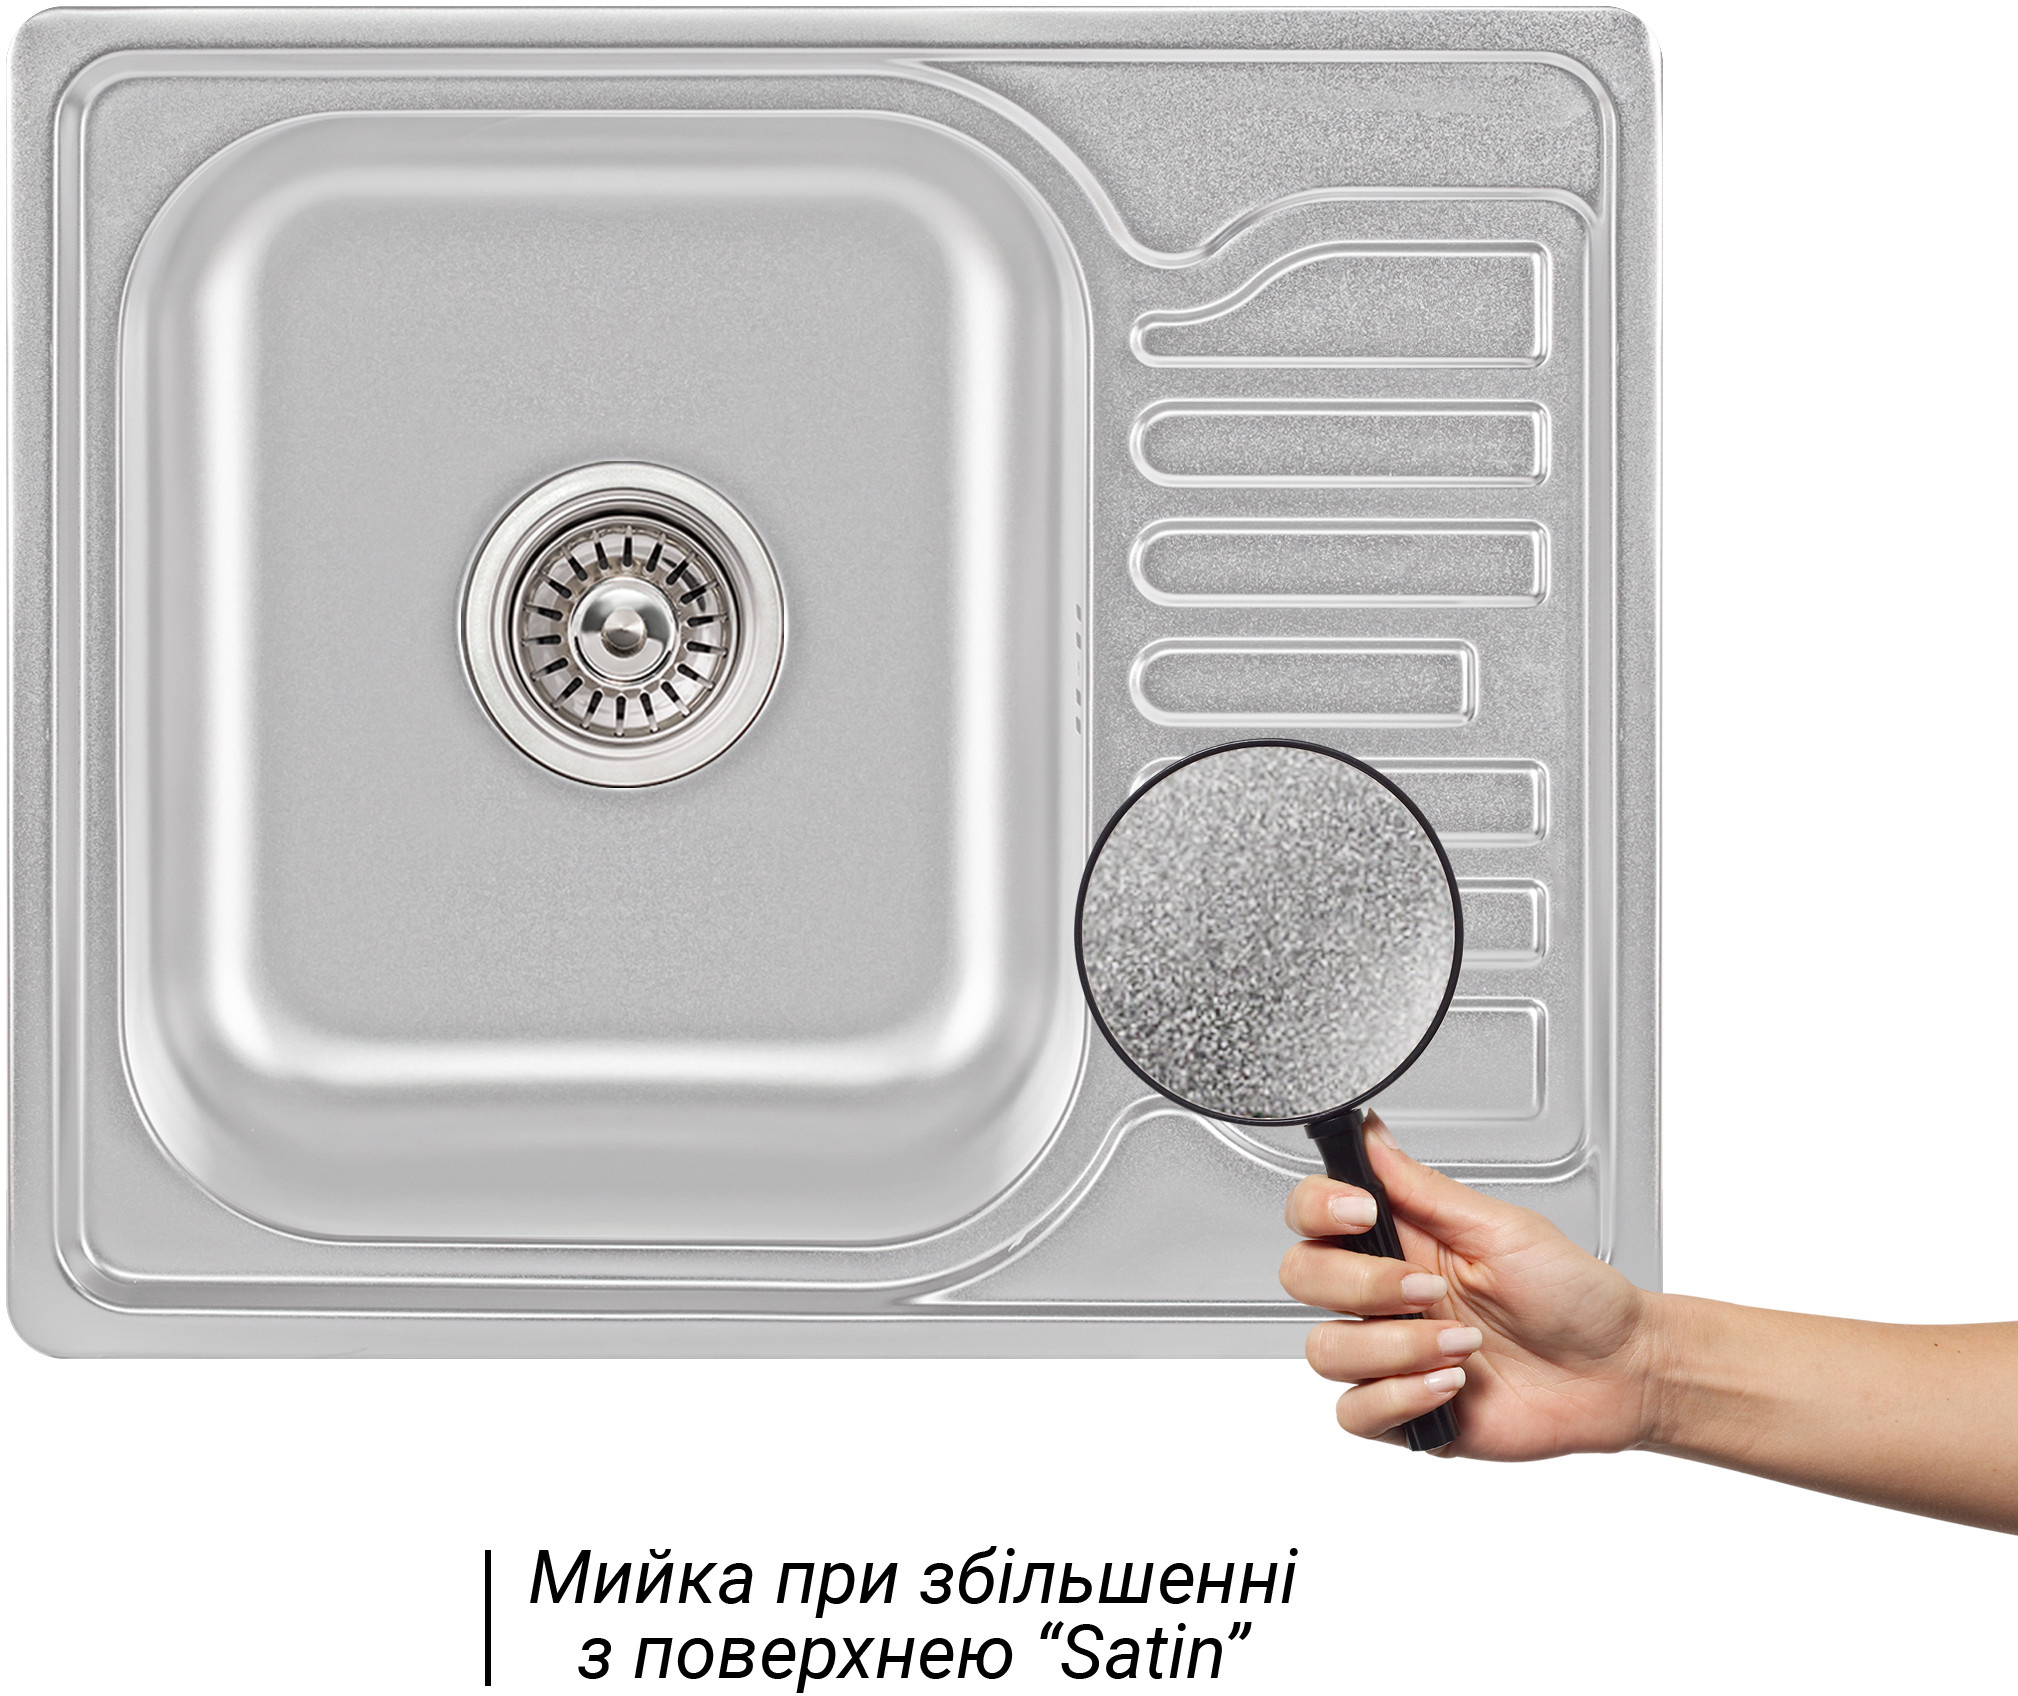 Кухонная мойка Lidz 5848 0,8 мм Satin (LIDZ5848SAT) цена 1134.00 грн - фотография 2